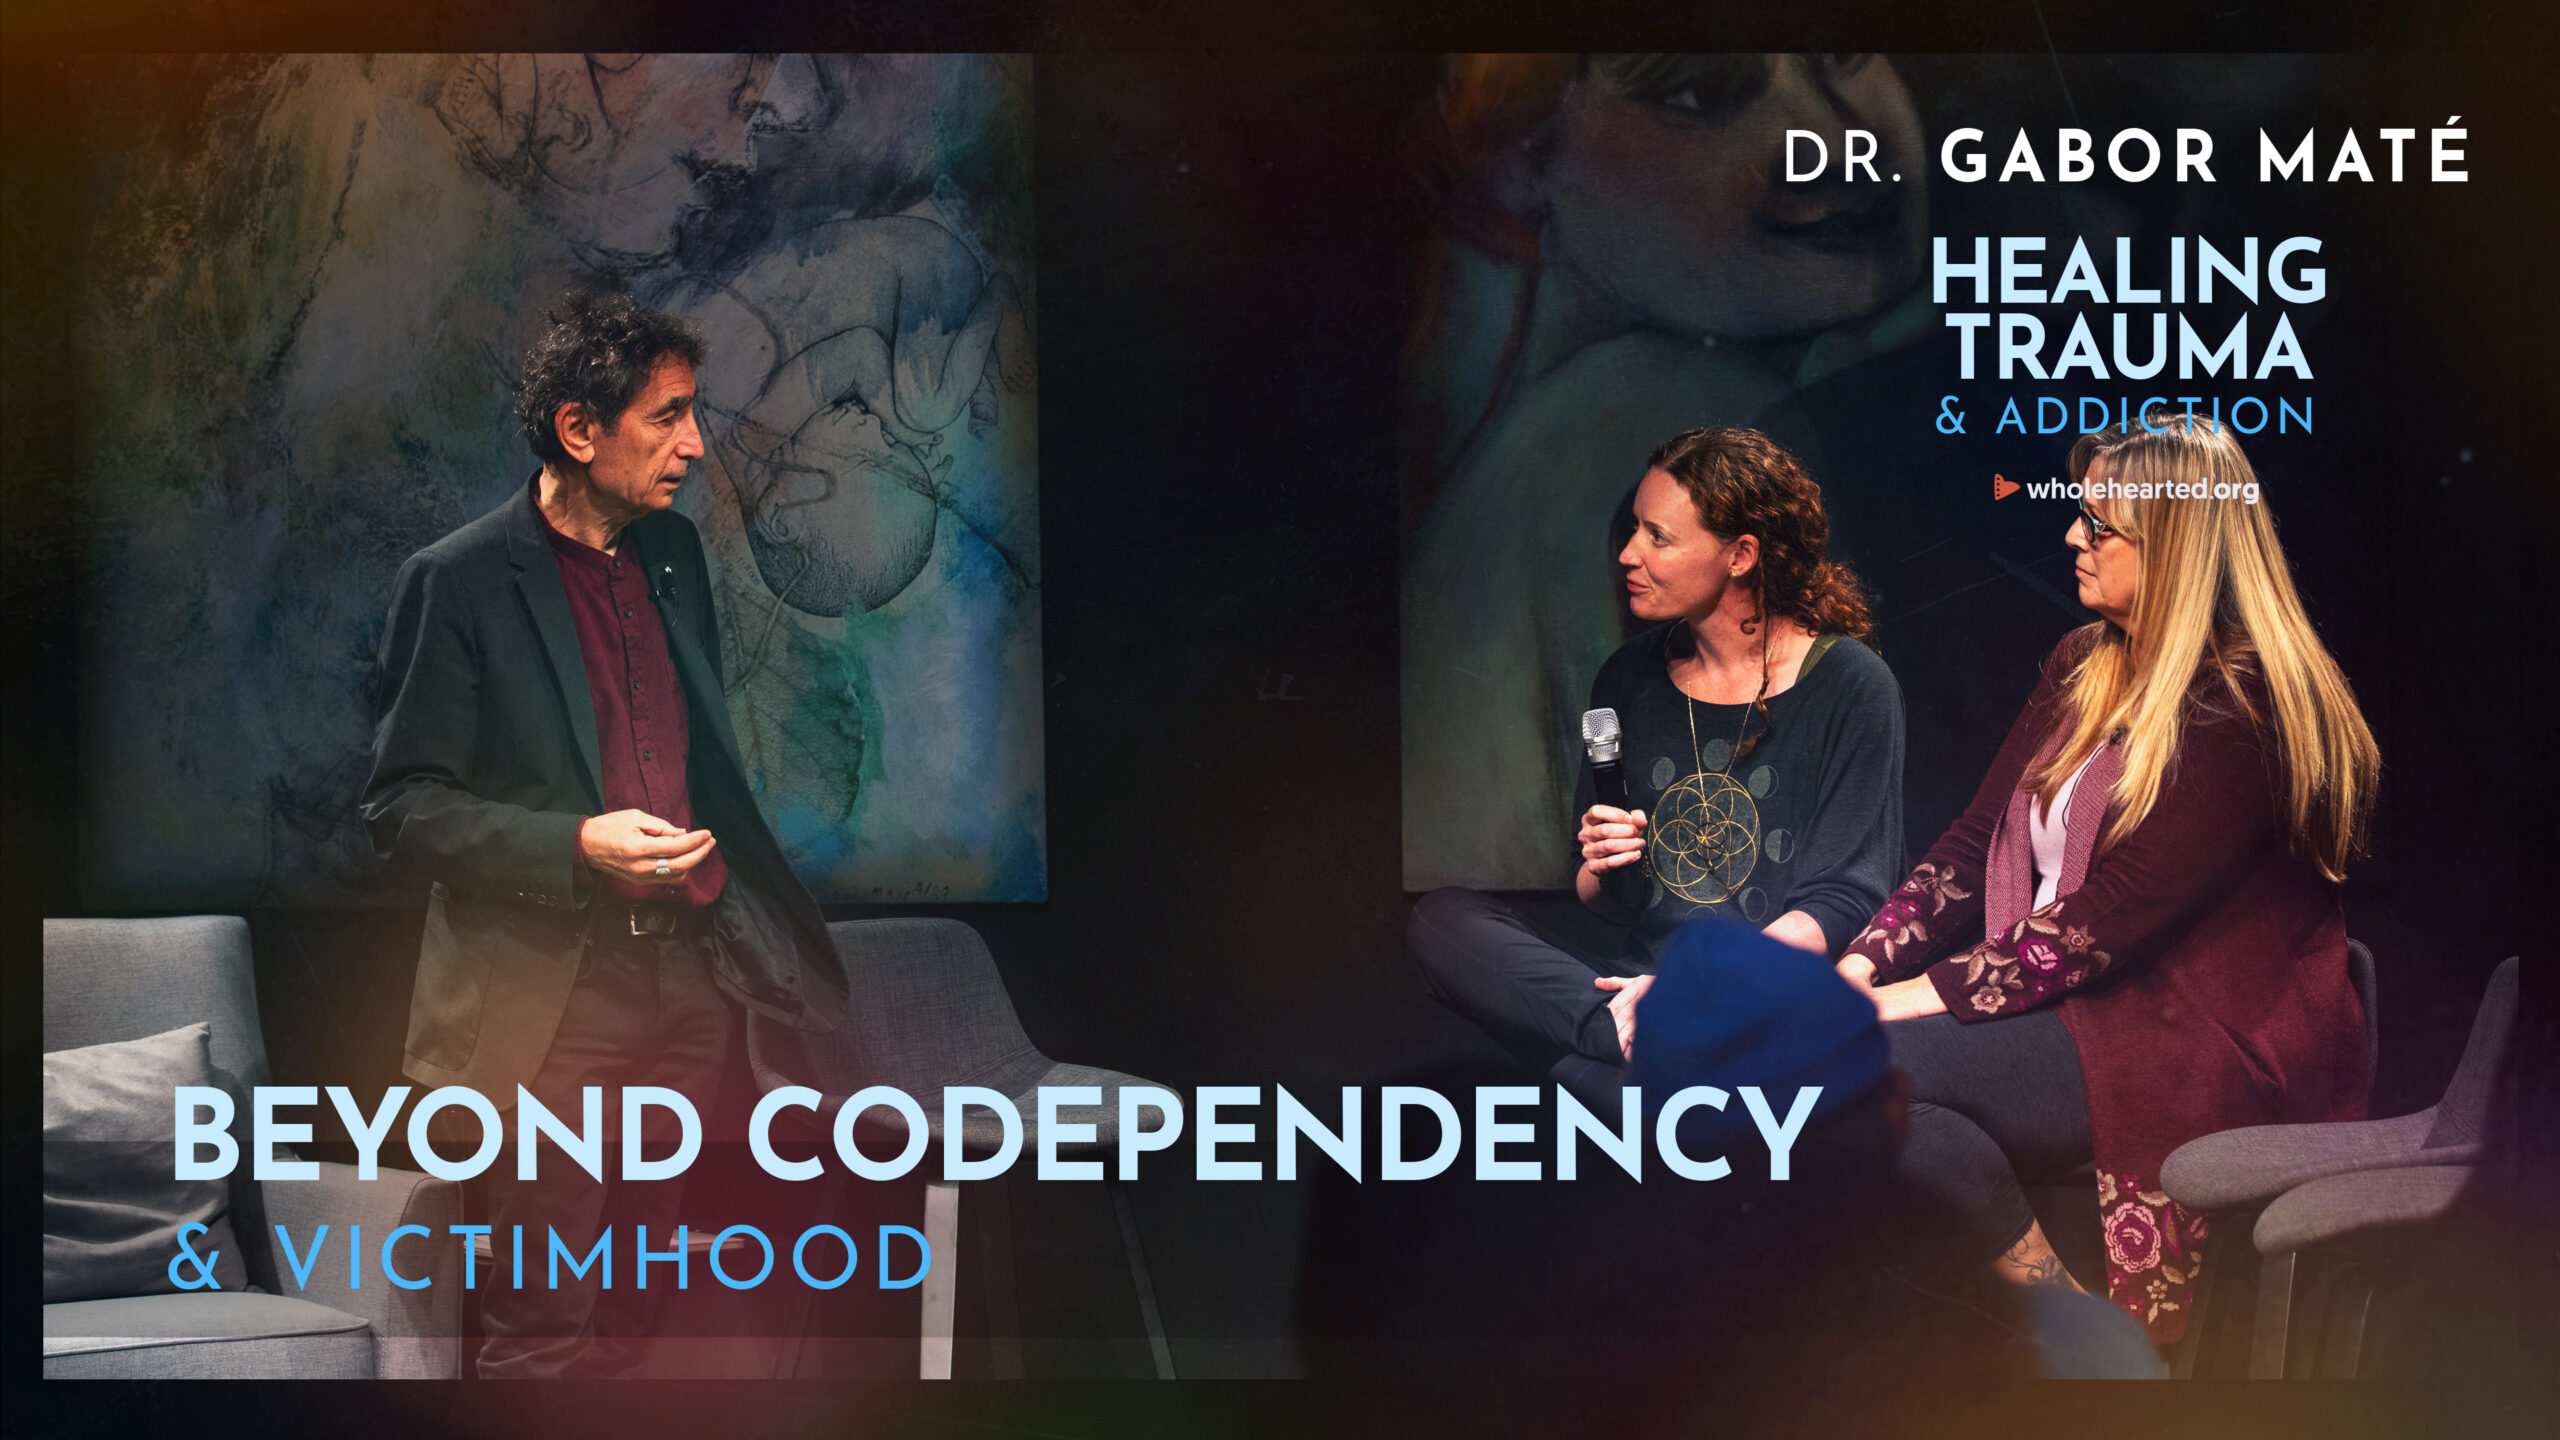 Episode Five: Beyond Codependency & Victimhood